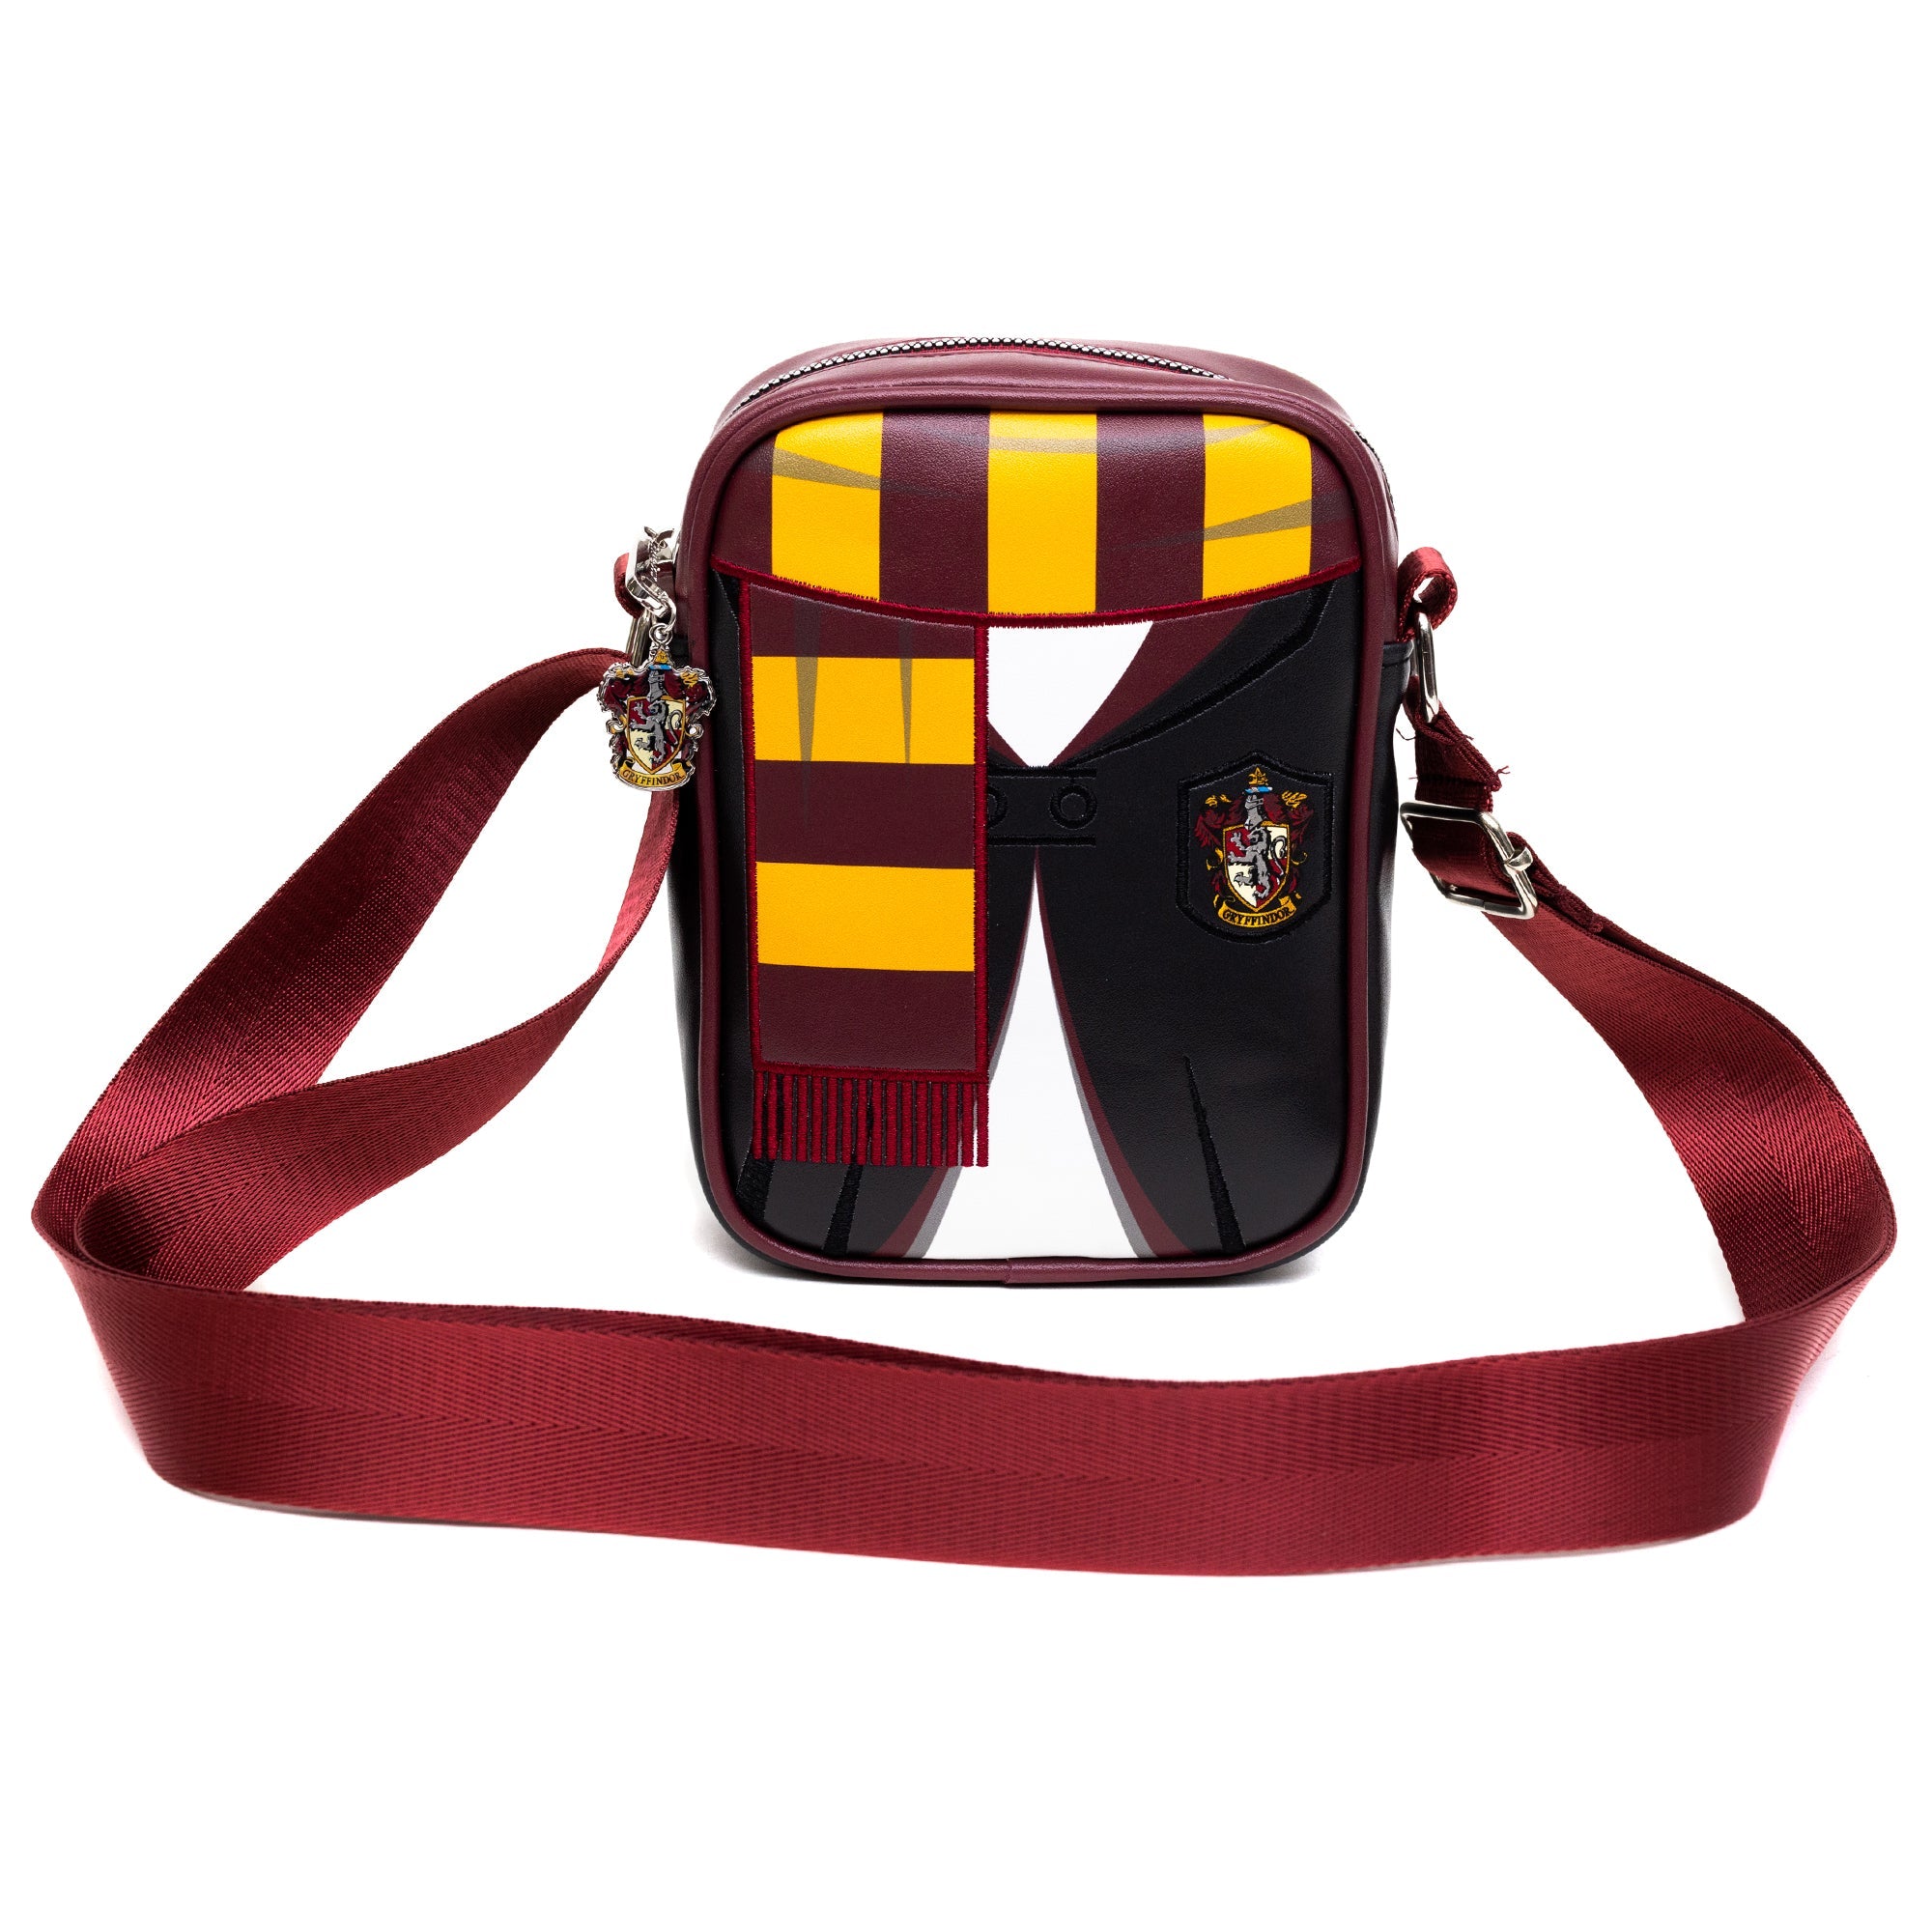 The Wizarding World of Harry Potter Hogwarts School Gryffindor Uniform Crossbody Bag